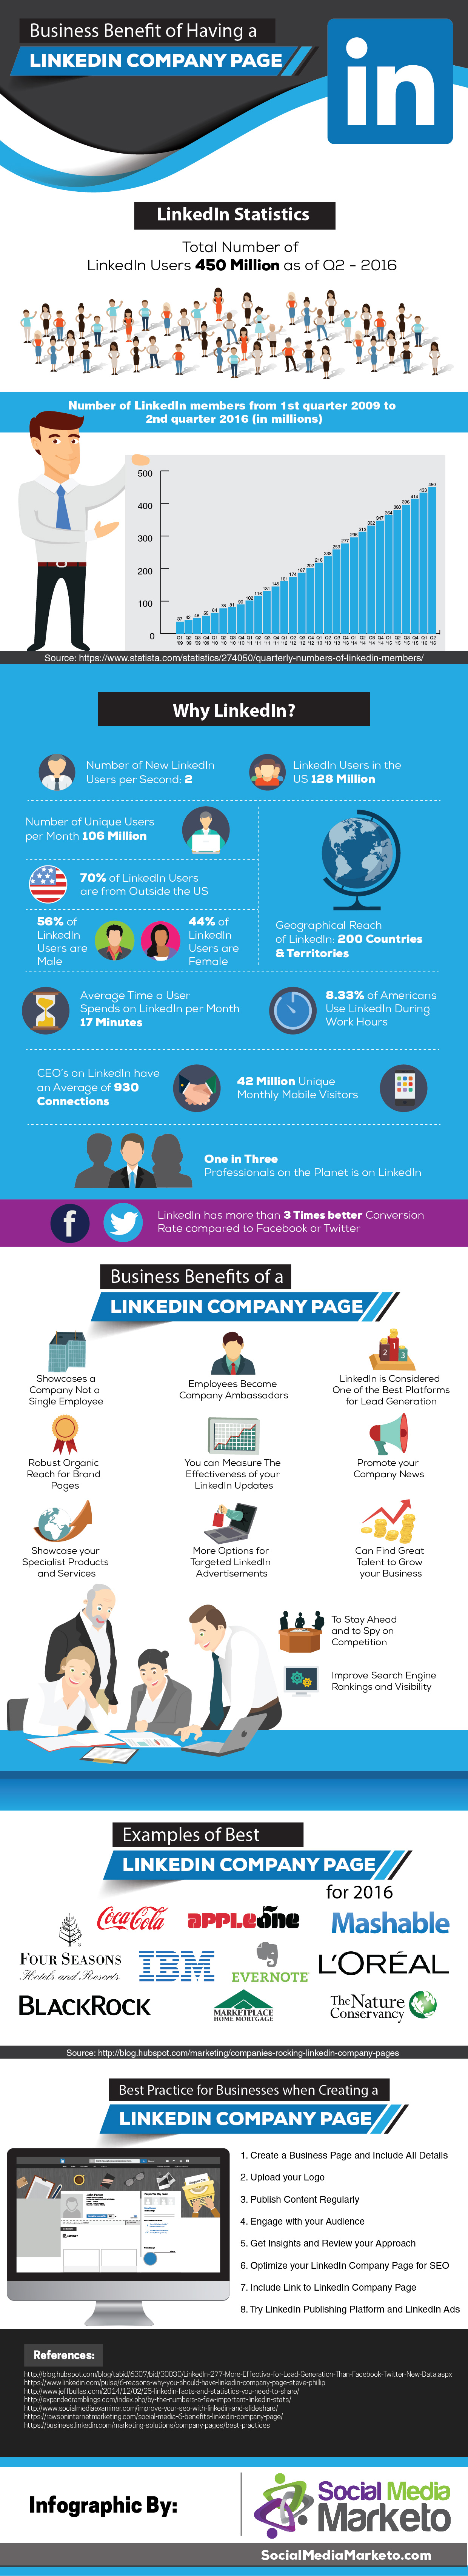 LinkedIn-Company-Page-Infographic.jpg